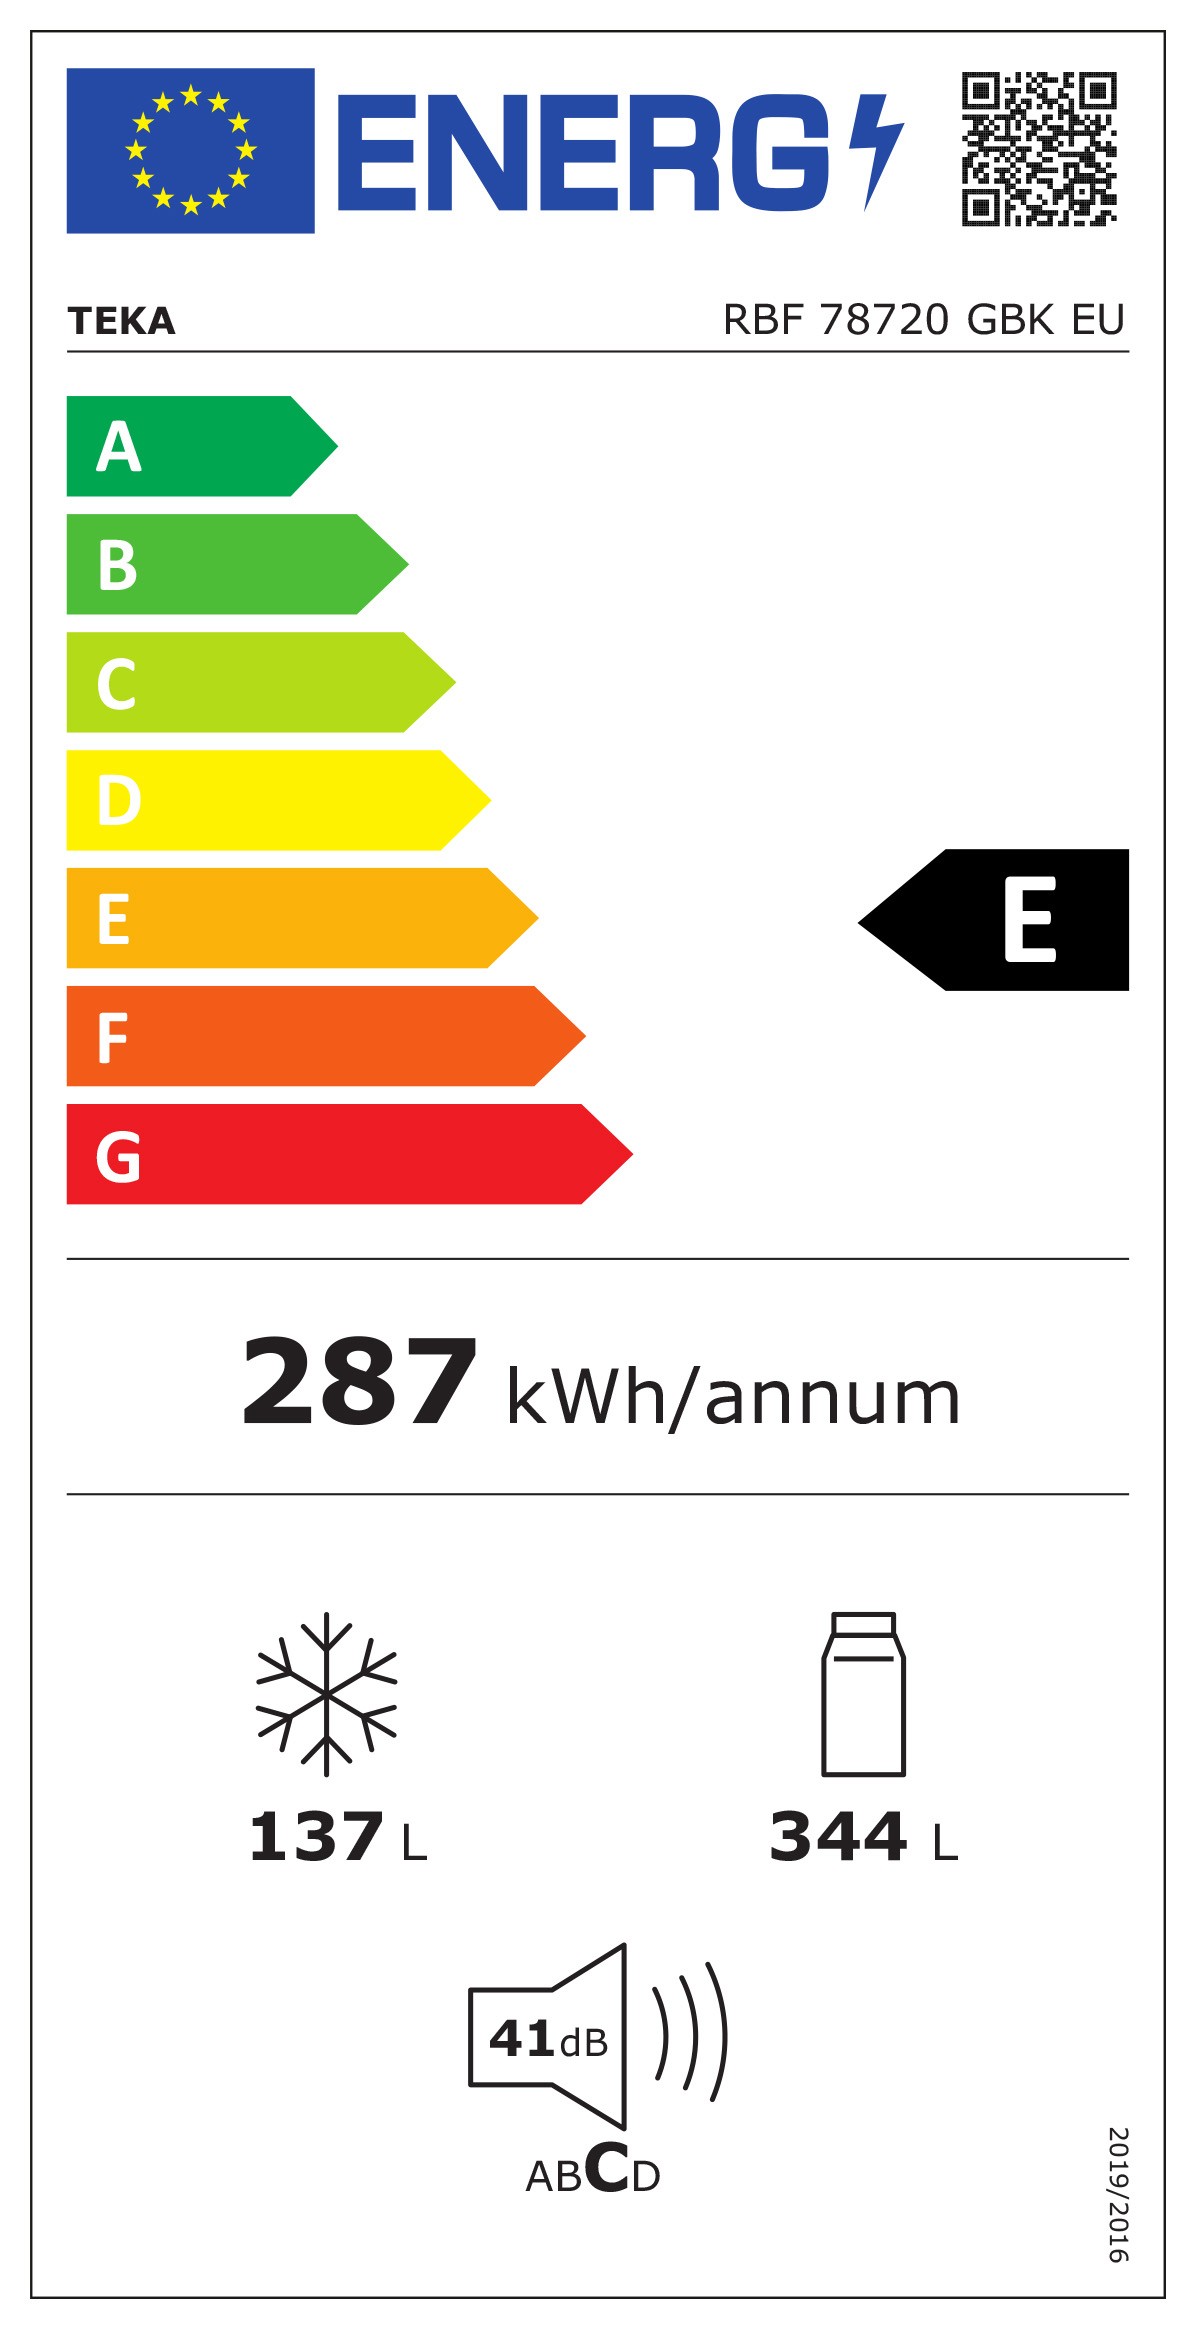 Etiqueta de Eficiencia Energética - 113400001